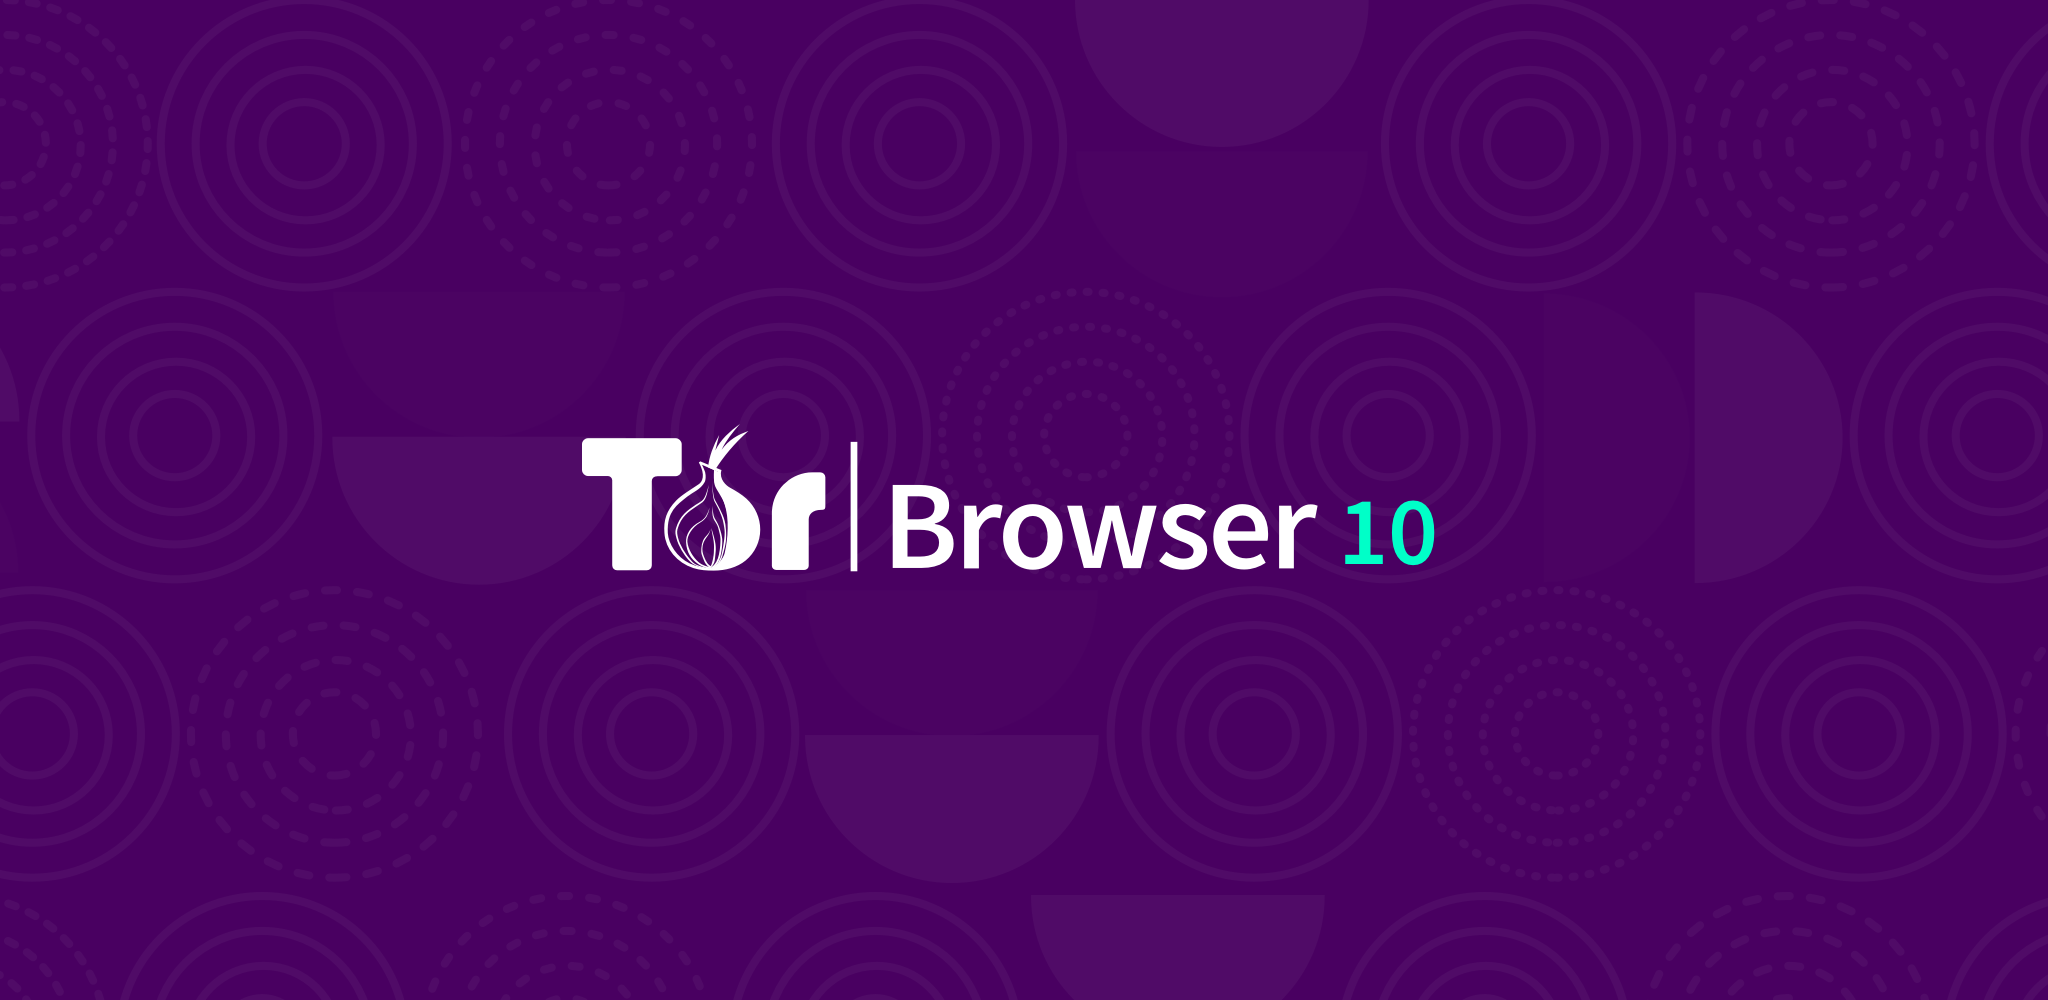 tor browser bundle 5 gydra